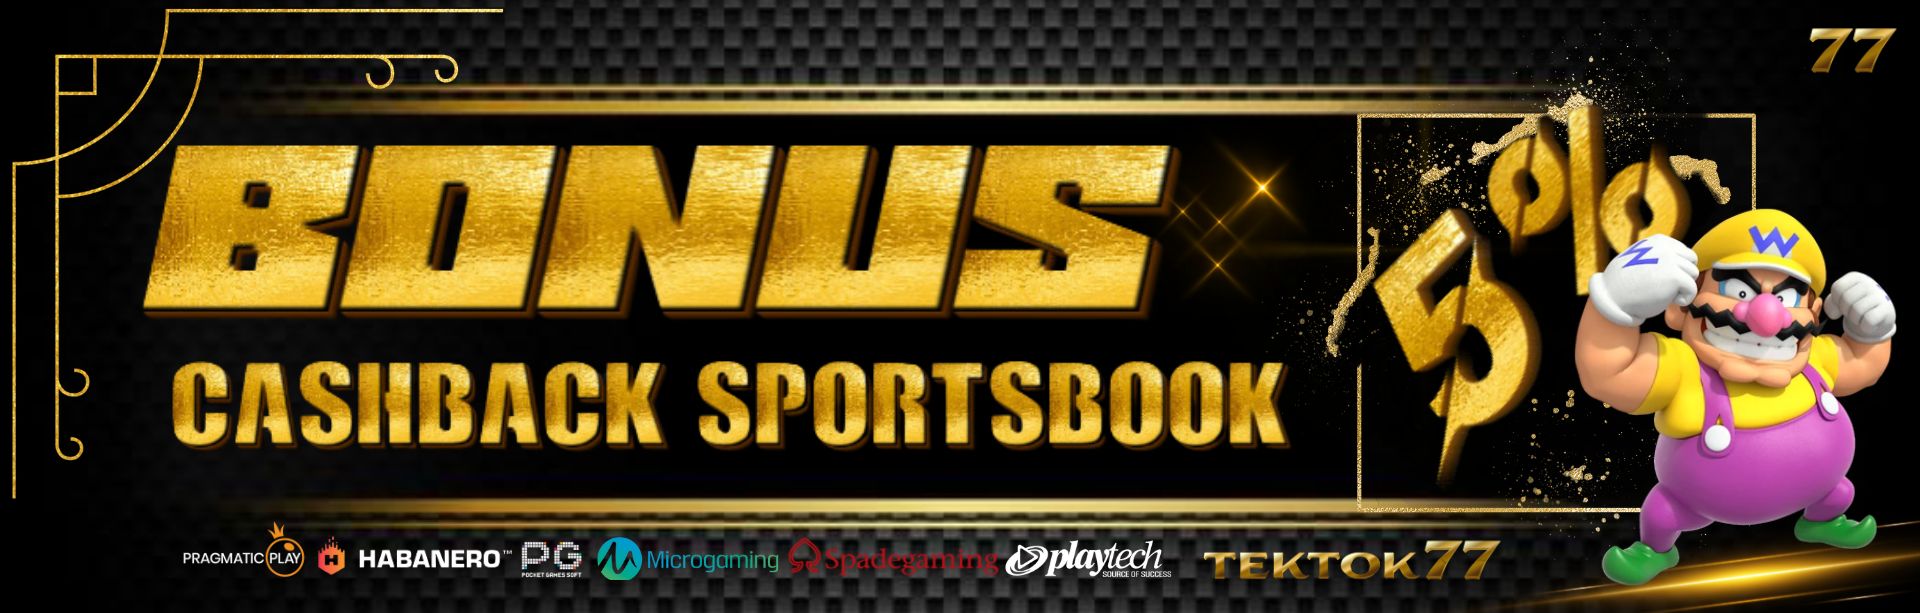 Cashback Sportbook